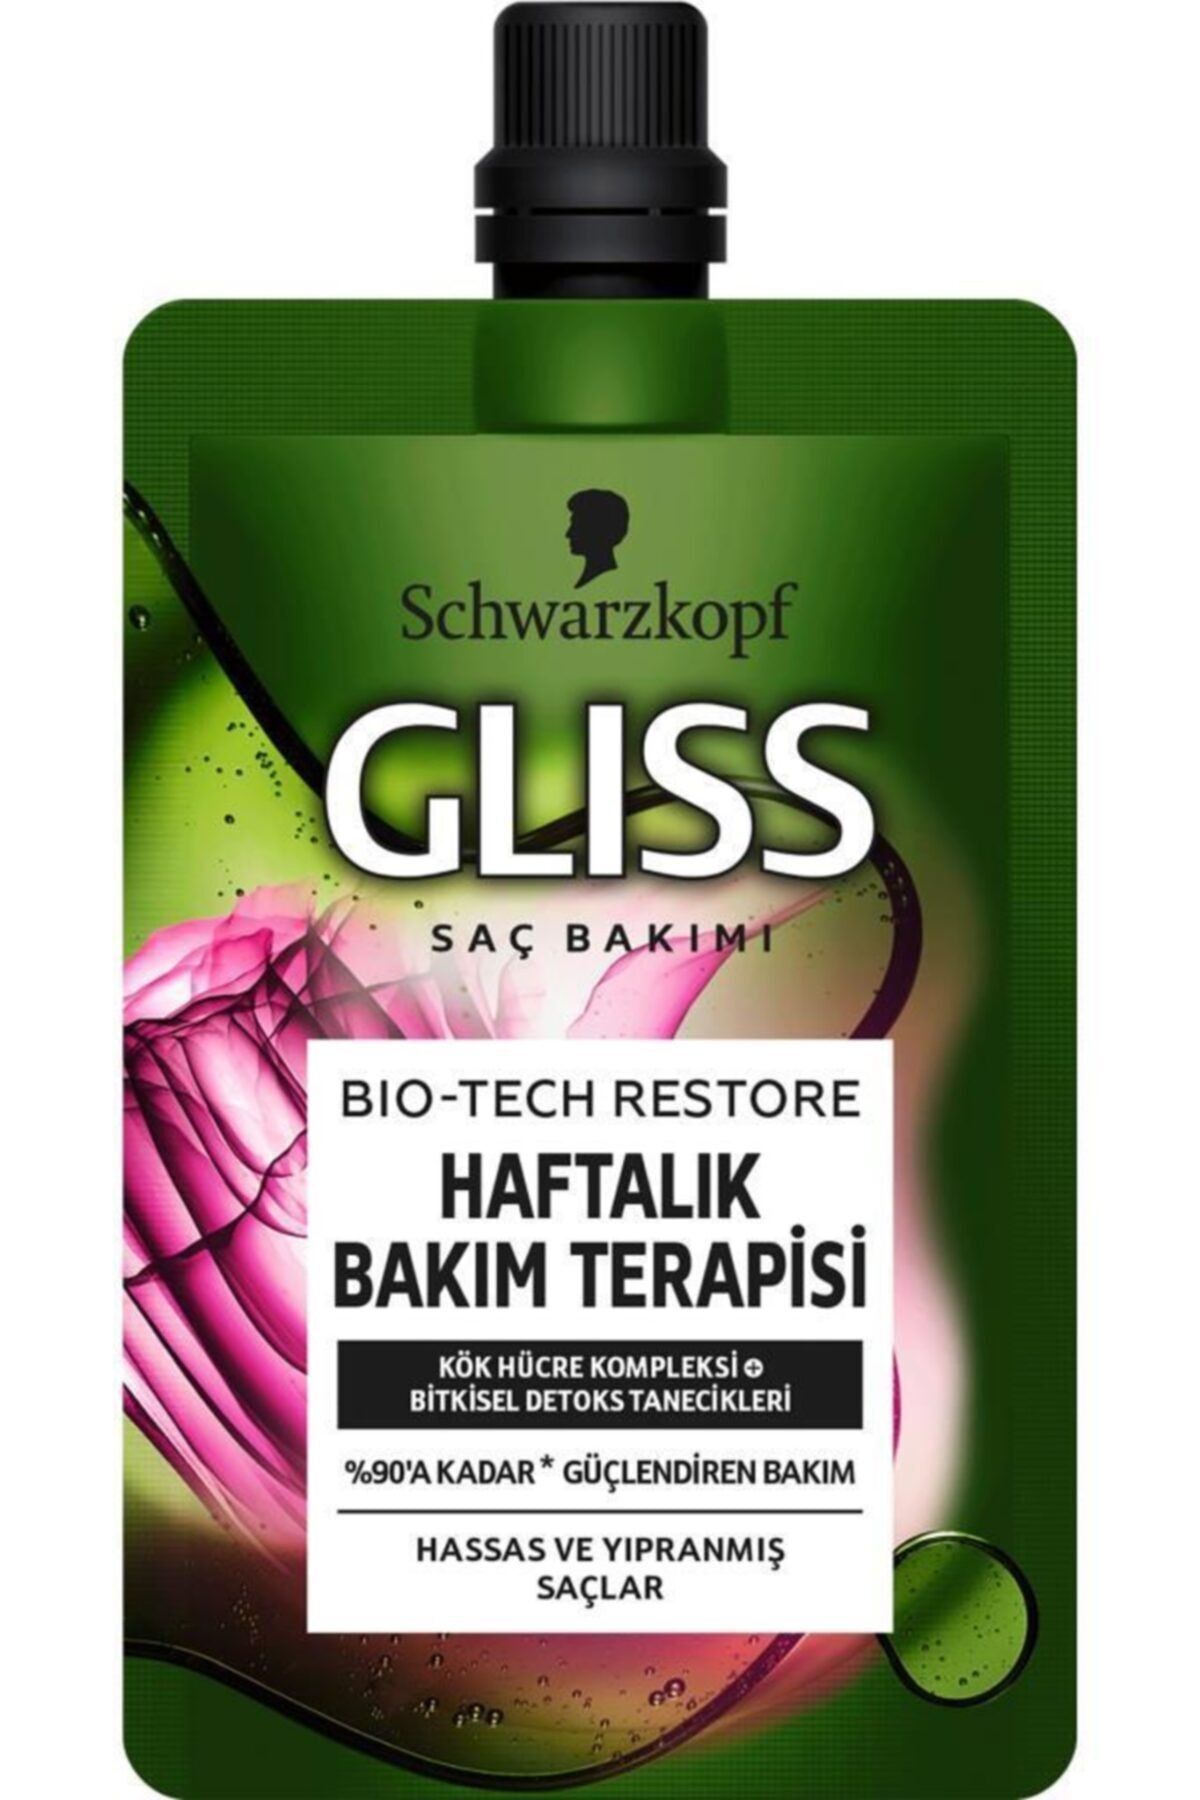 Gliss Schwarzkopf Gliss Bio-Tech Haftalik Bakim 
Terapisi 50 Ml